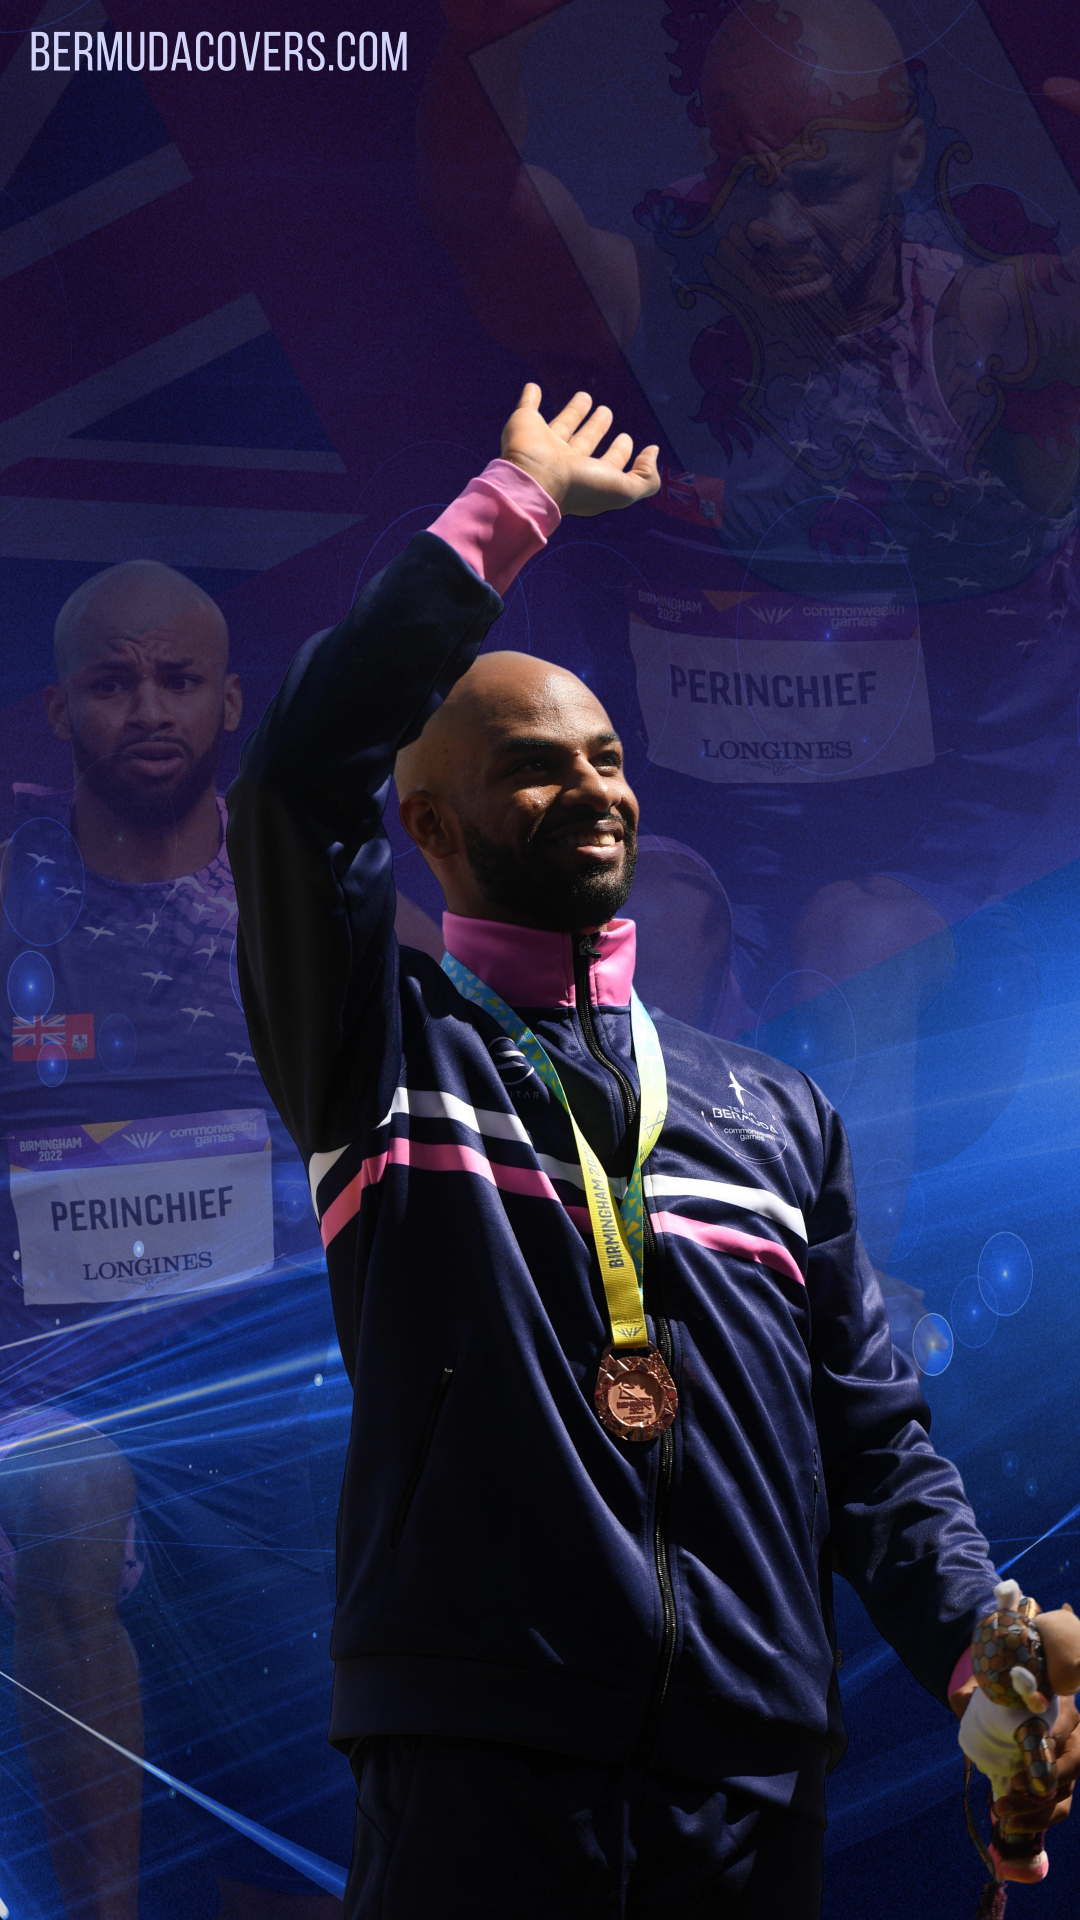 Jah-Nhai Perinchief Bermuda Commonwealth Game Medal Winner graphic image social media 2022 (1)